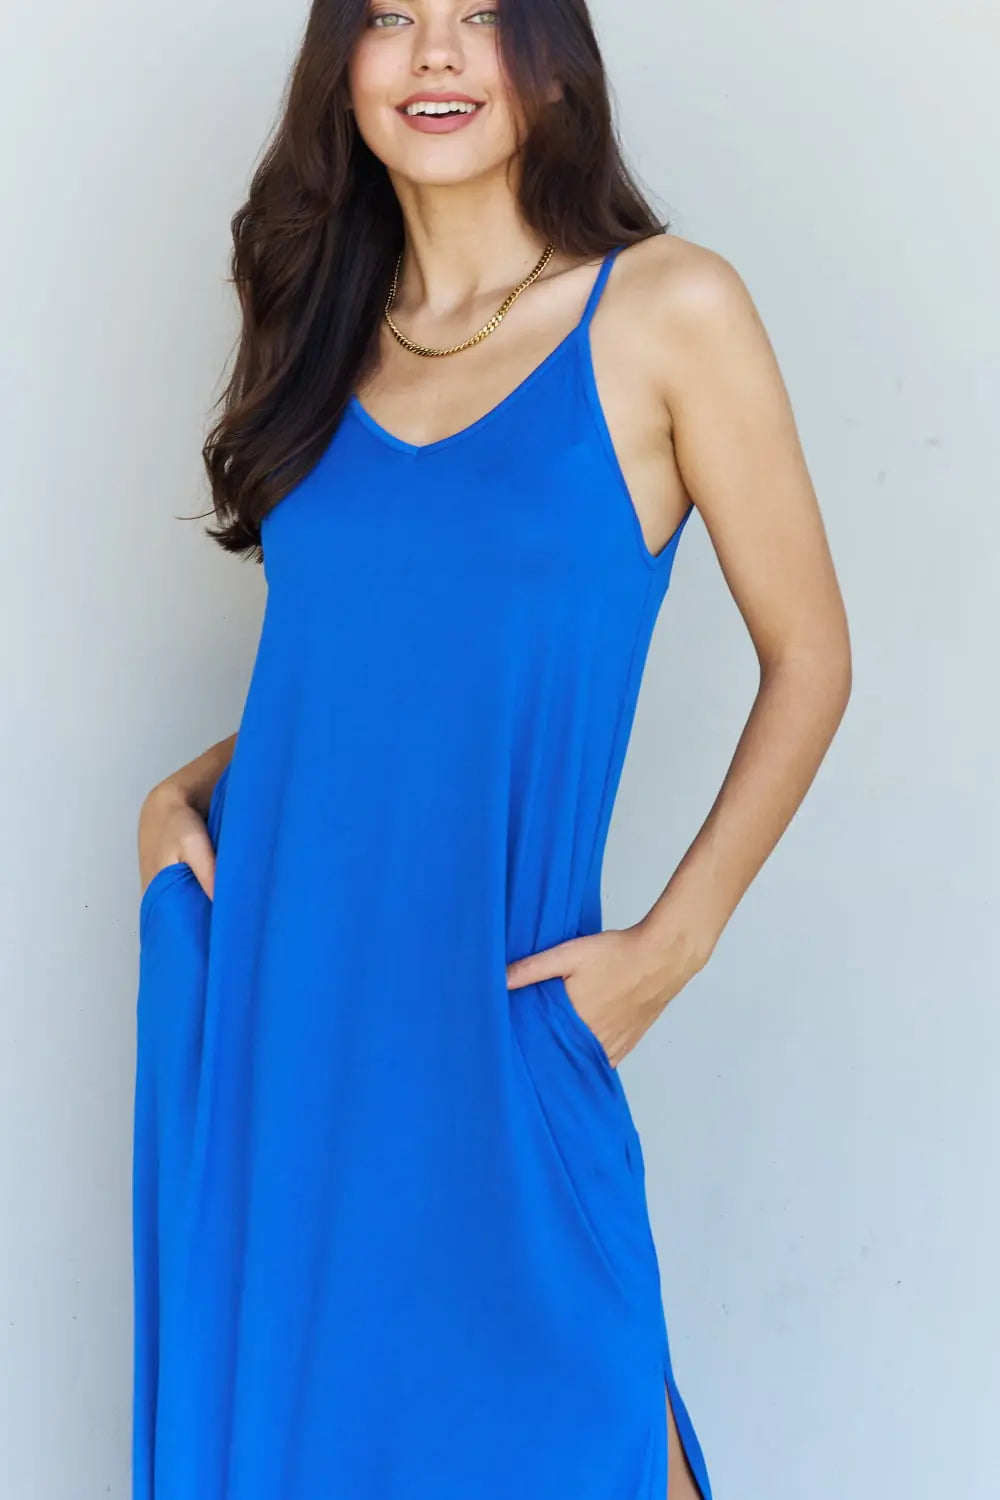 Ninexis Good Energy Full Size Cami Side Slit Maxi Dress in Royal Blue - Hot Trends